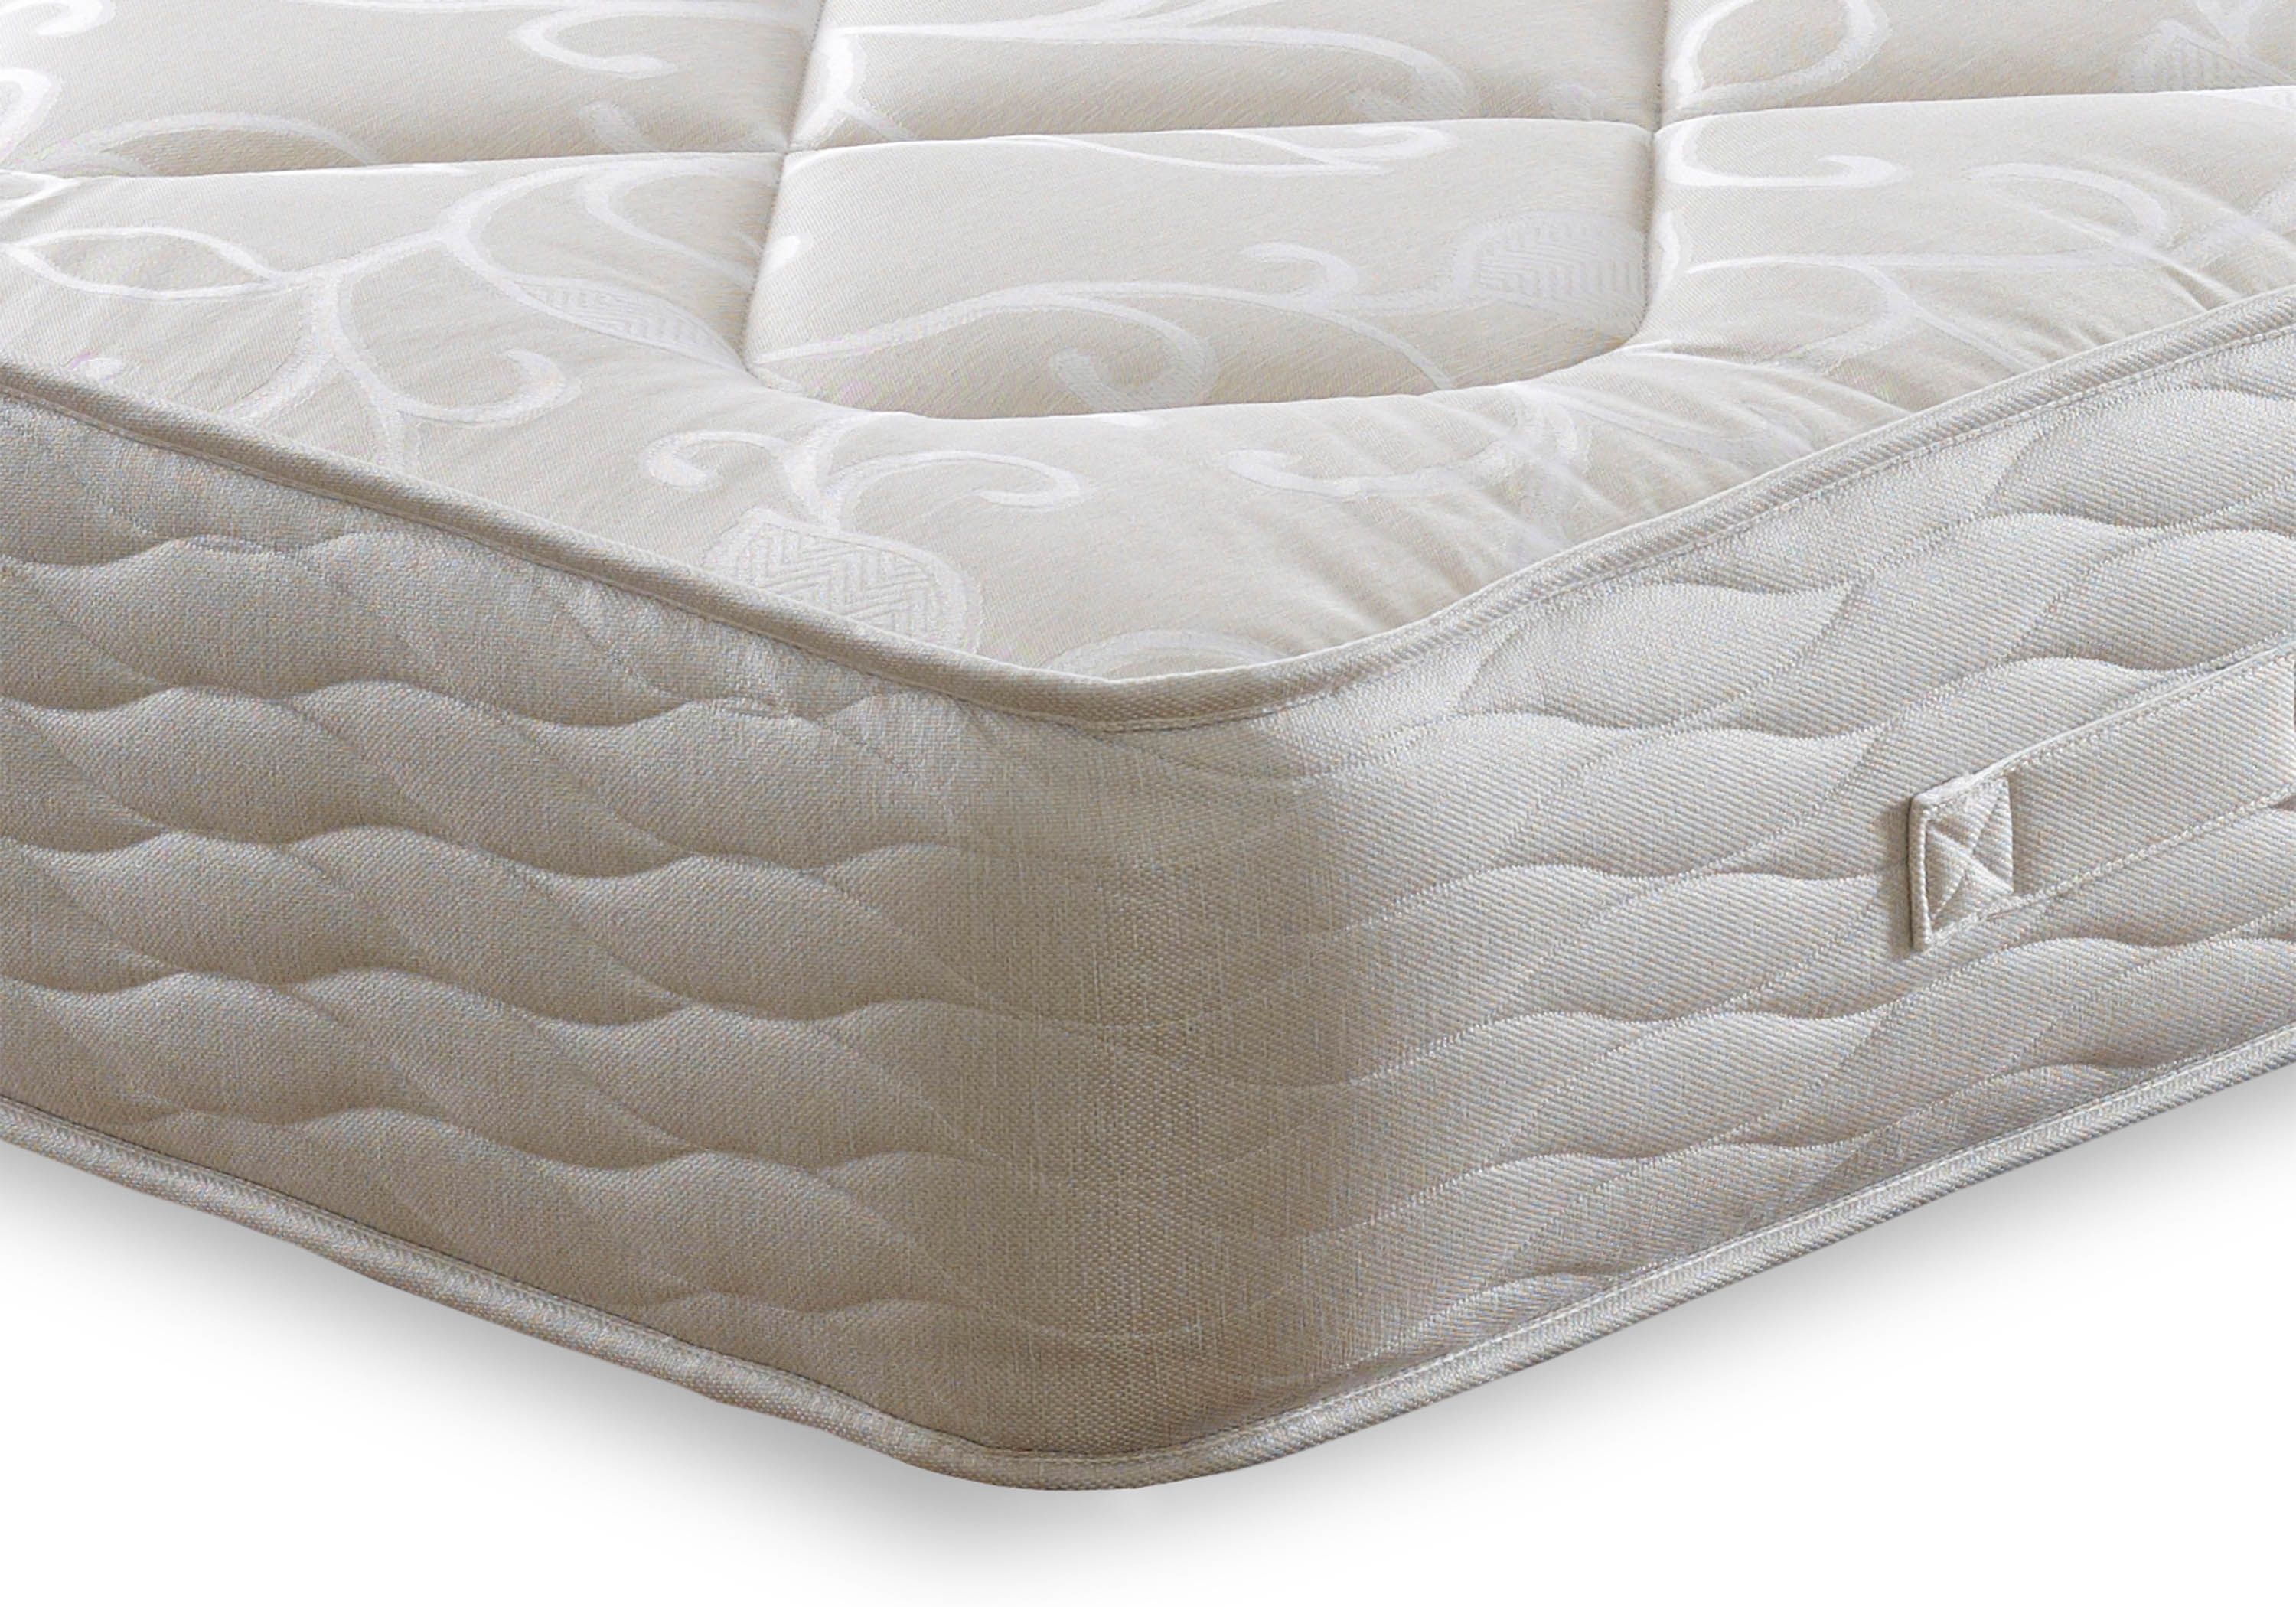 pegasus air mattress order online